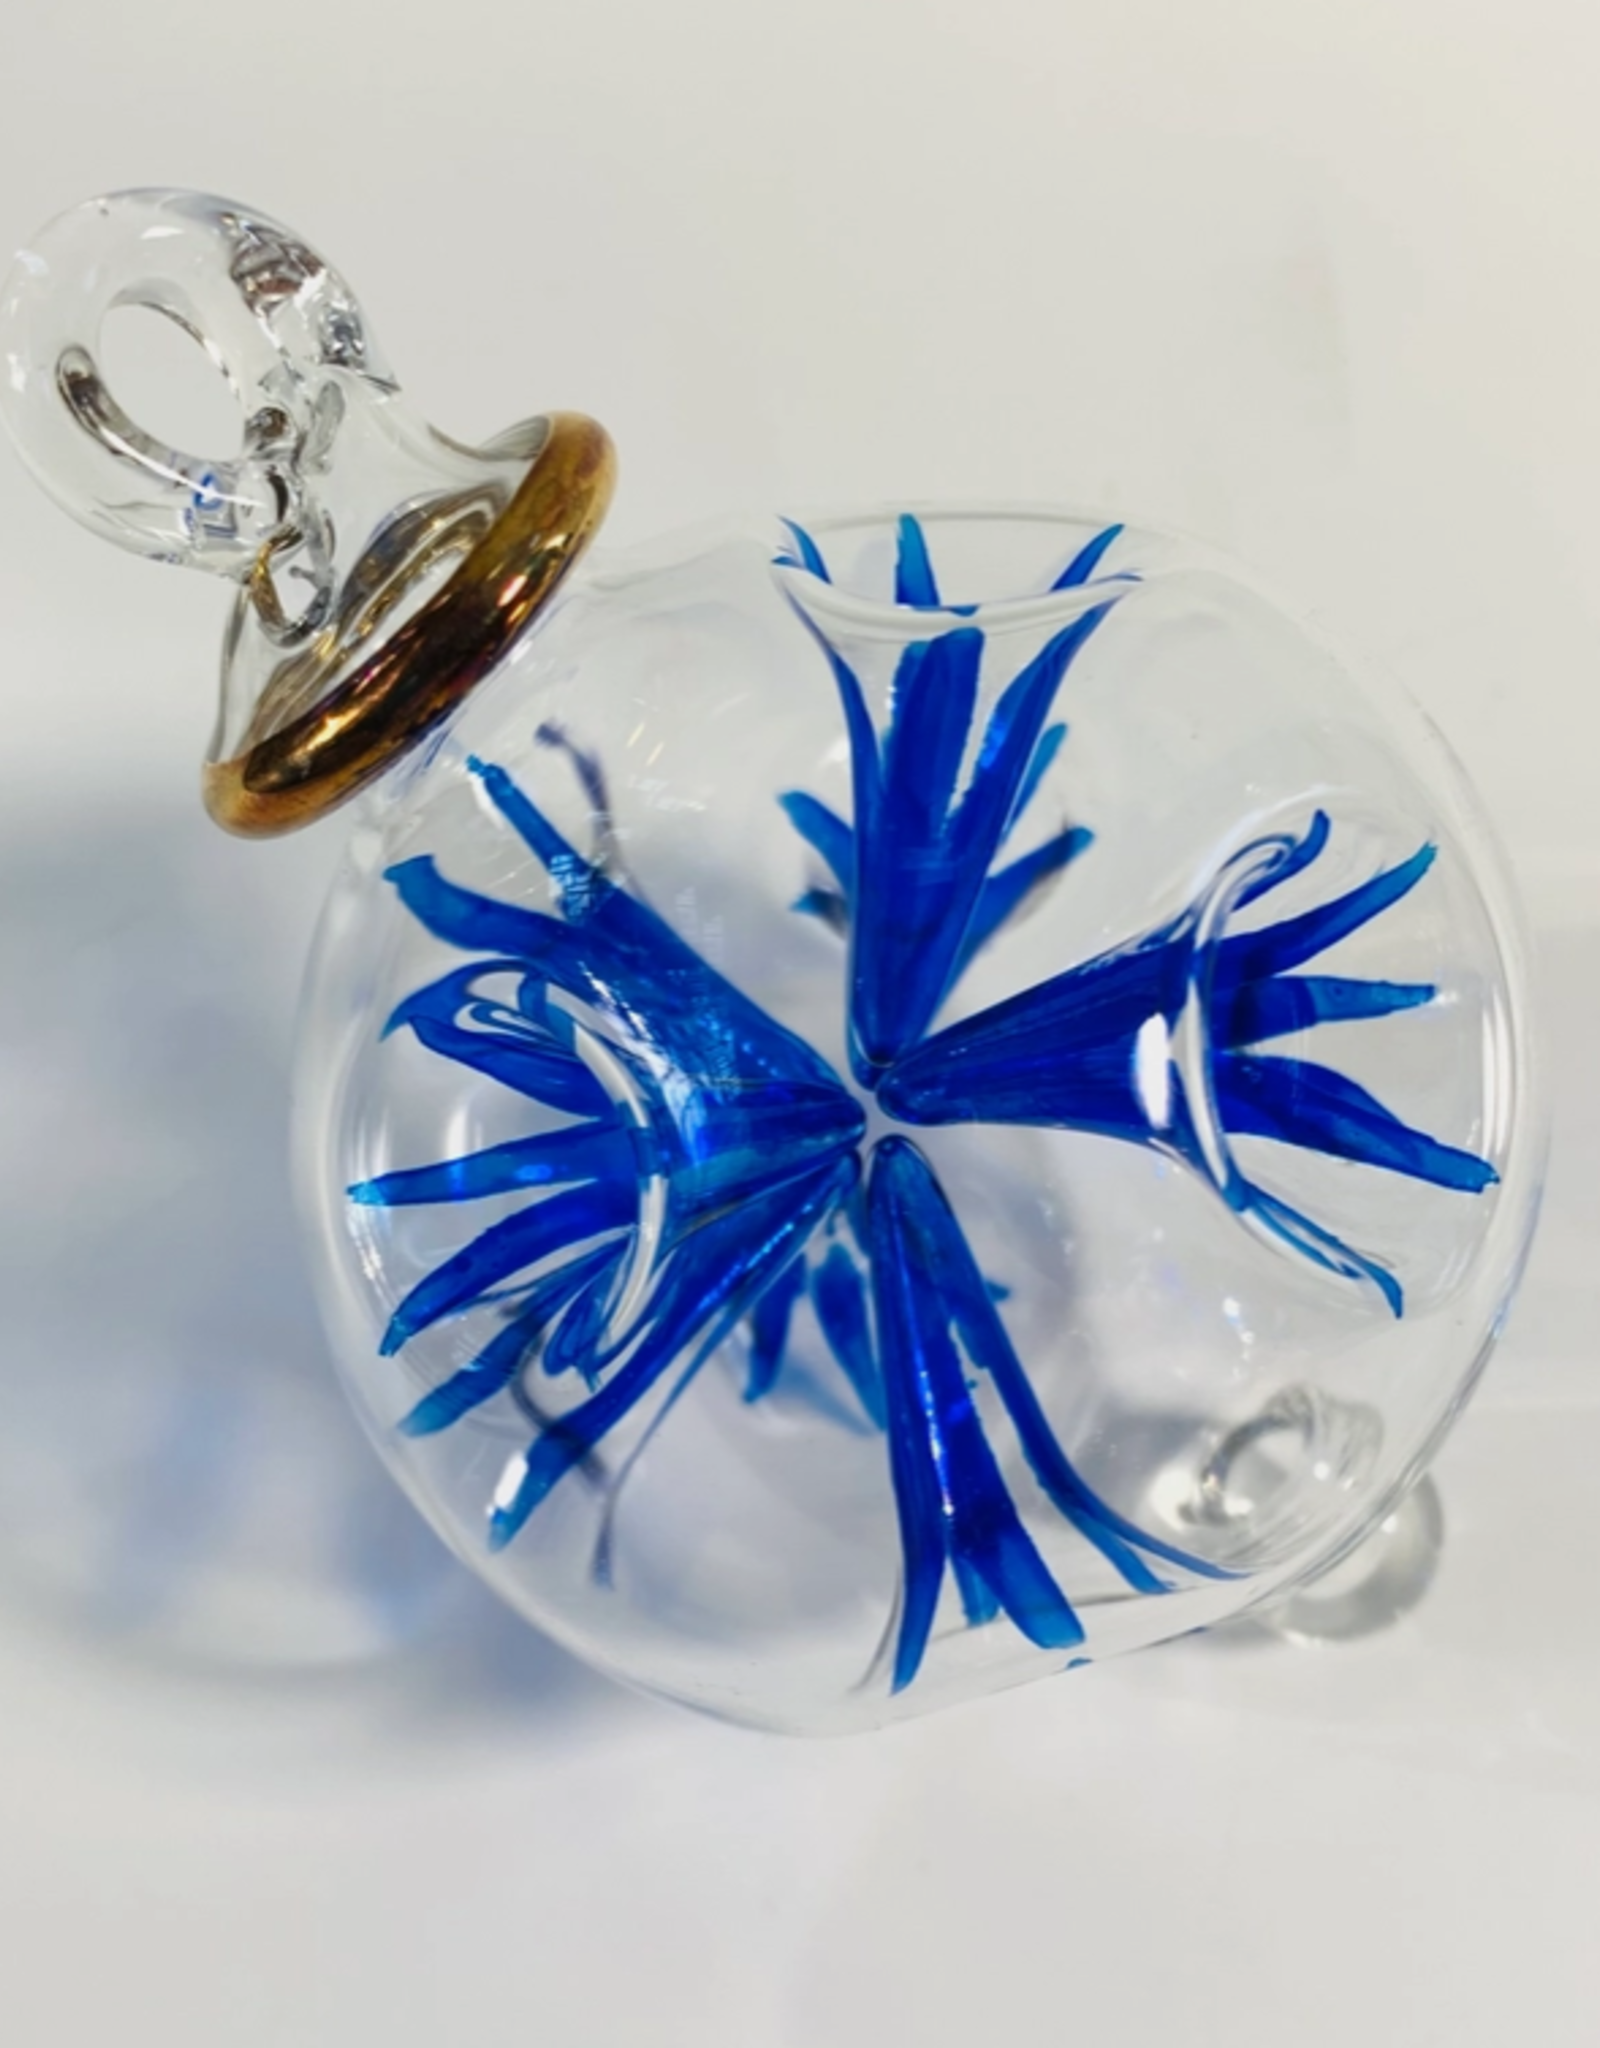 Dandarah Blown Glass Ornament - Blossoms Blue